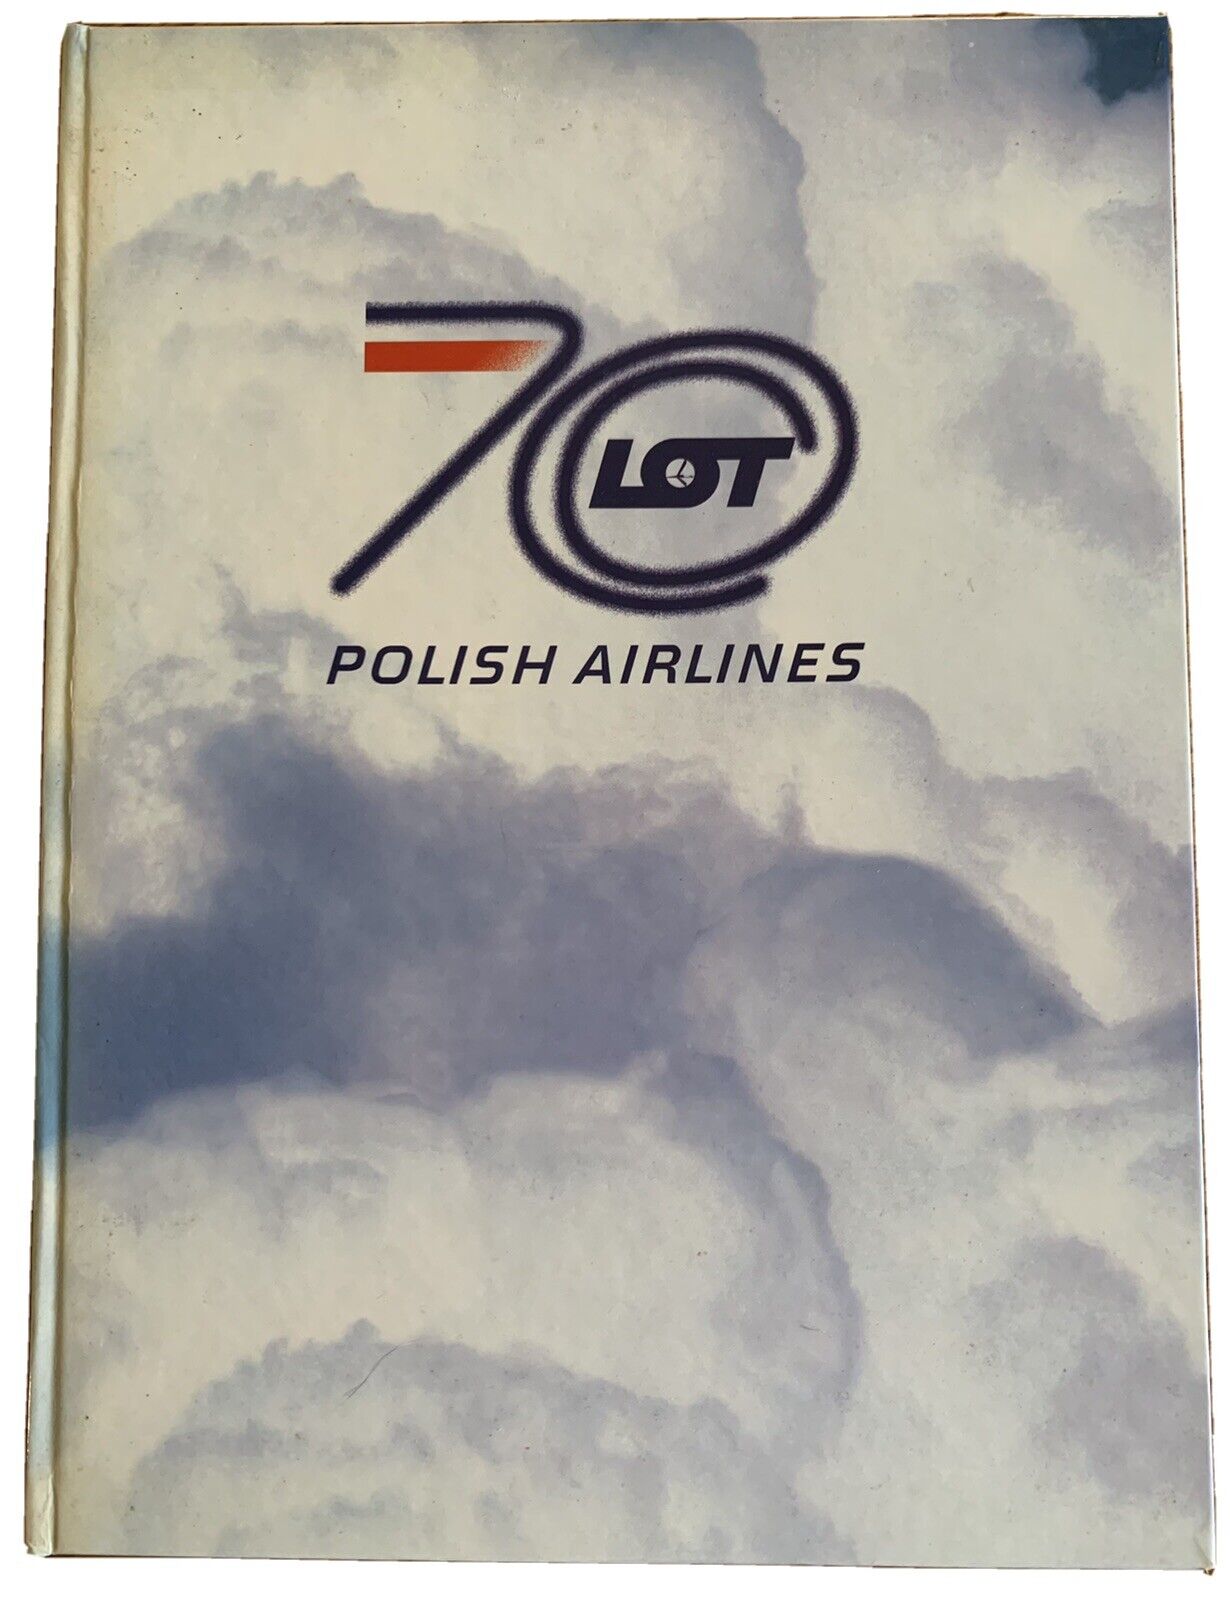 LOT POLISH AIRLINES HISTORY BOOK 70 YEARS 1999 IL62 TU134 B767 TU154 B737 DC3